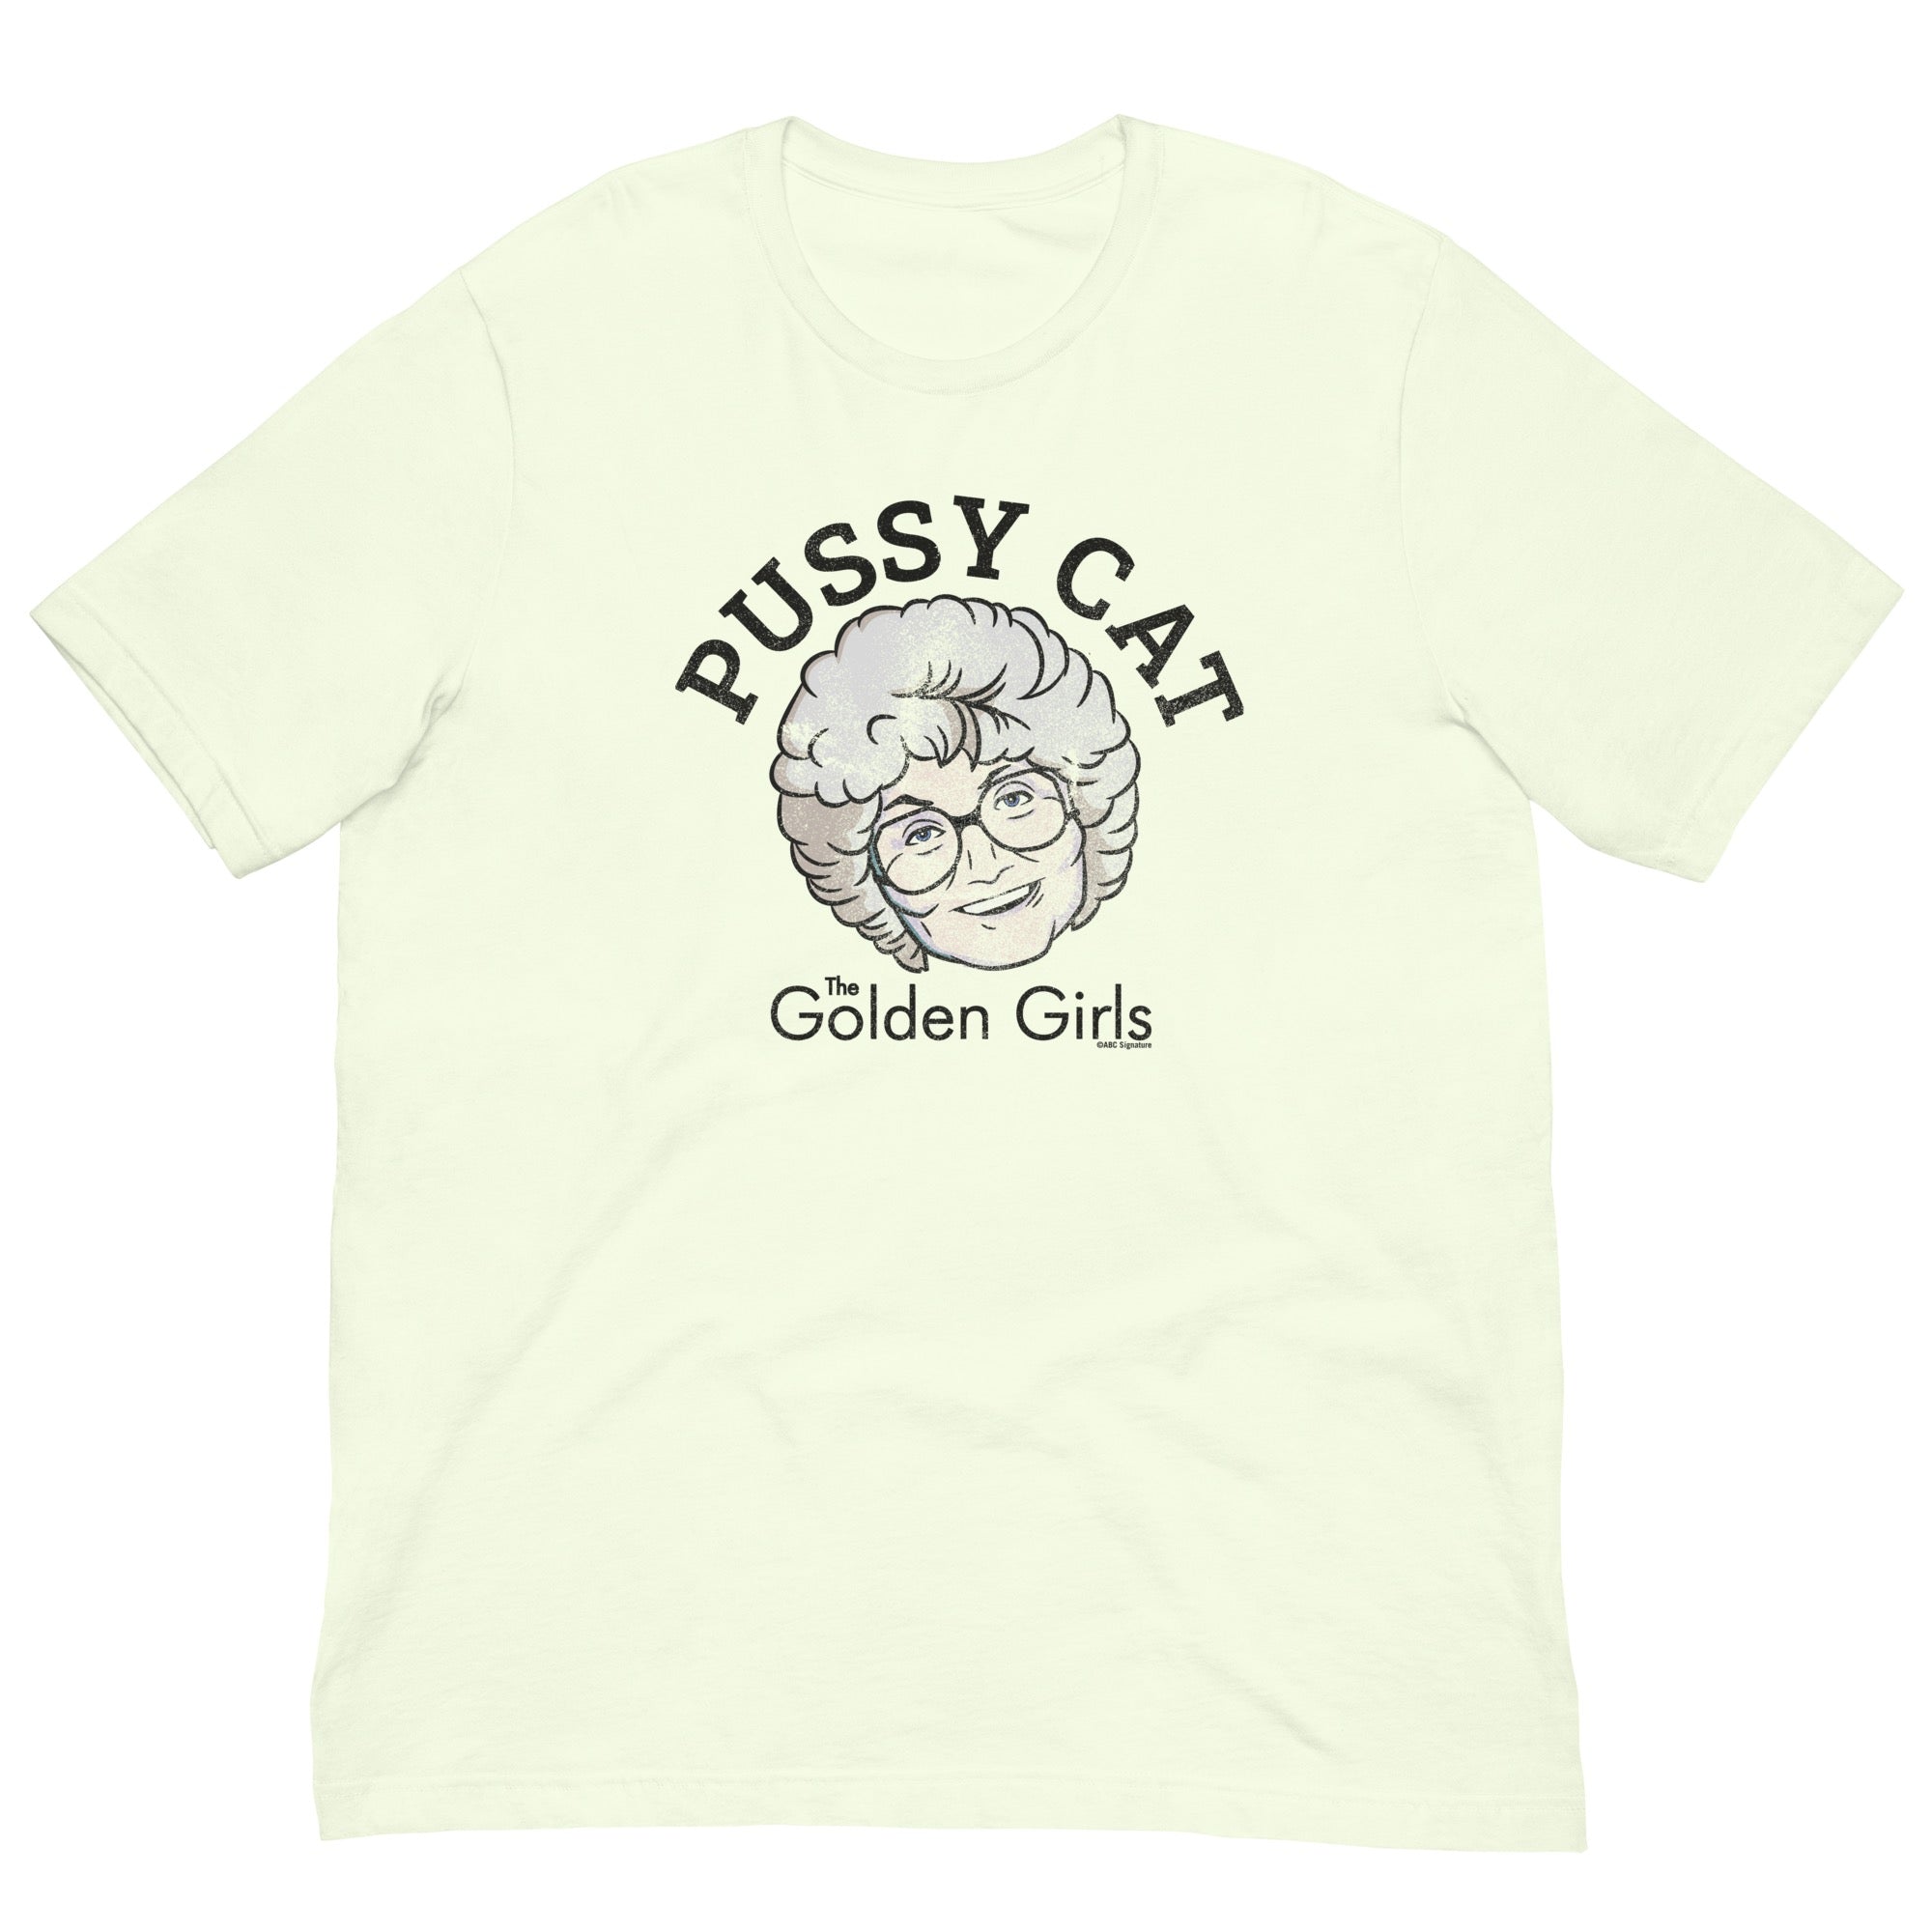 The Golden Girls Pussy Cat Adult T-Shirt